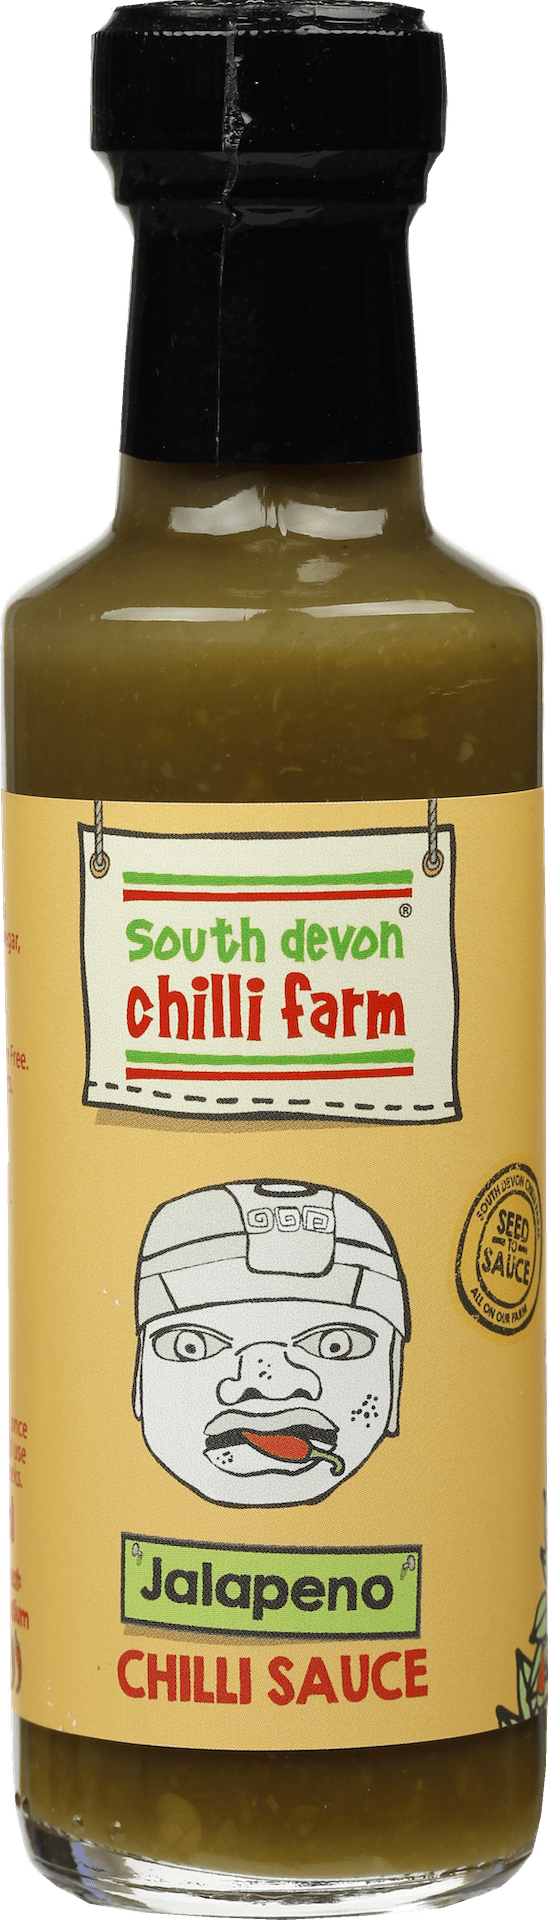 Jalapeno Chilli Sauce 100ml South Devon Chilli Farm